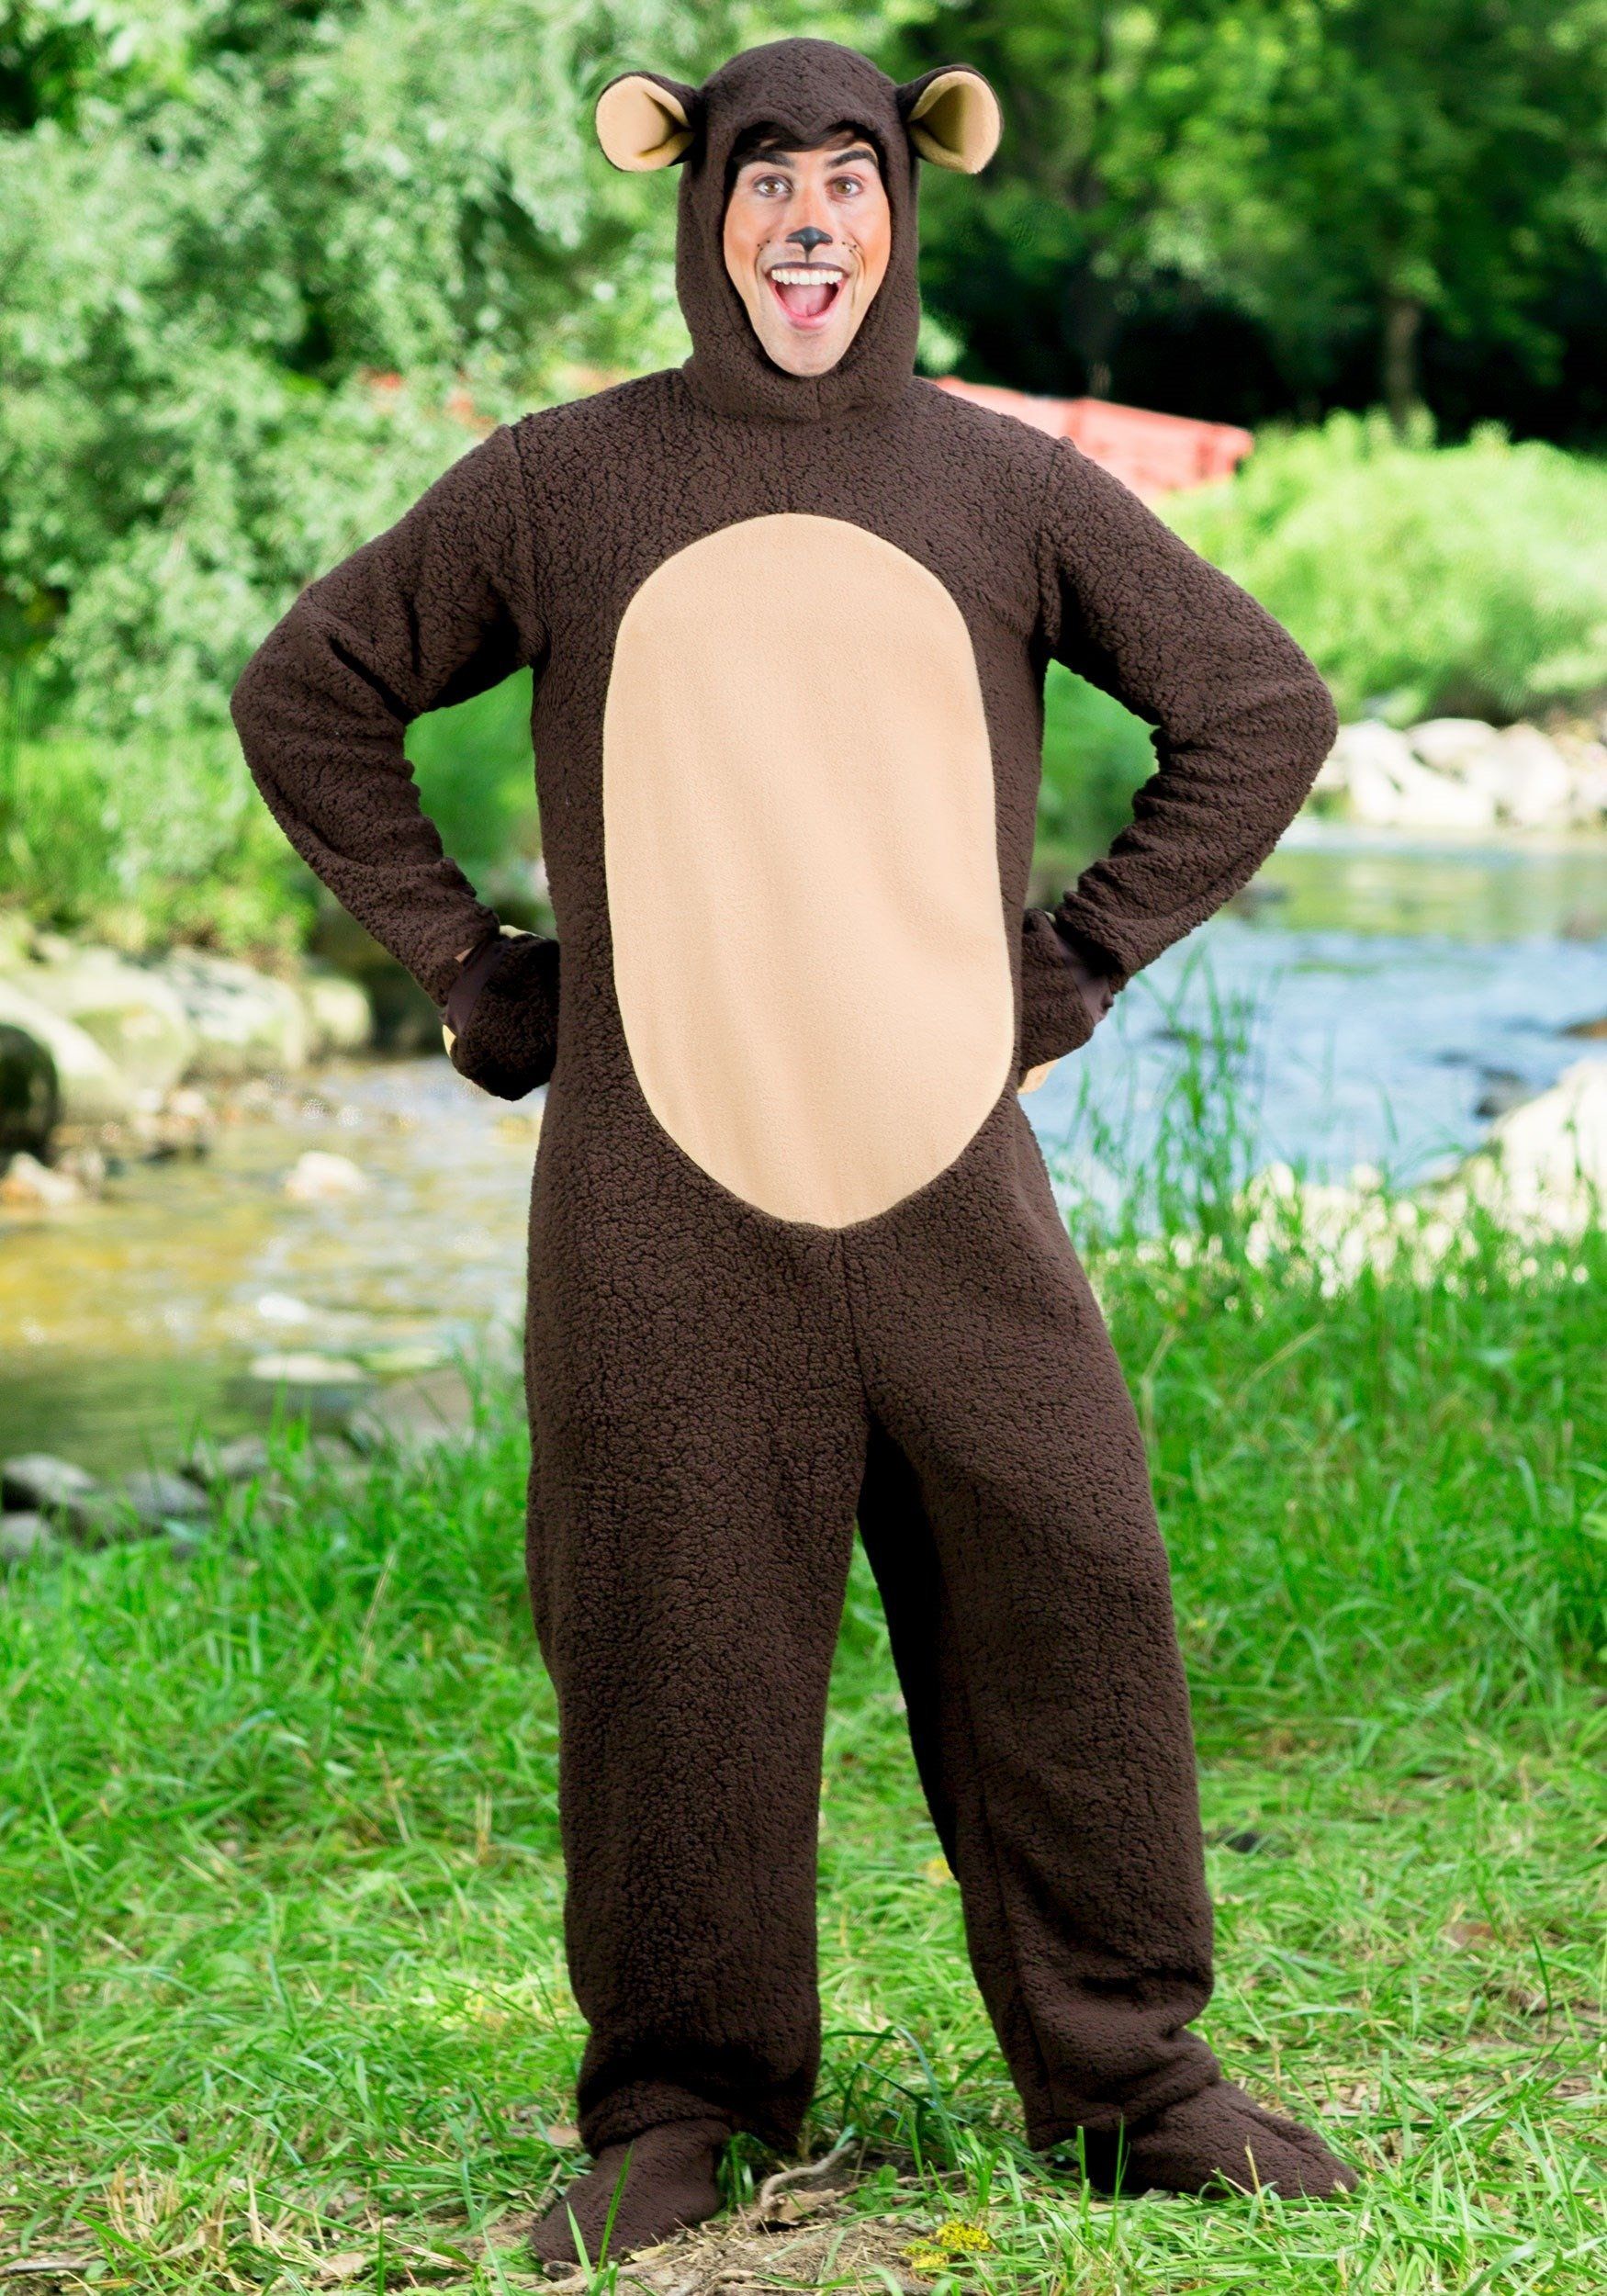 Adult bear costume teddy